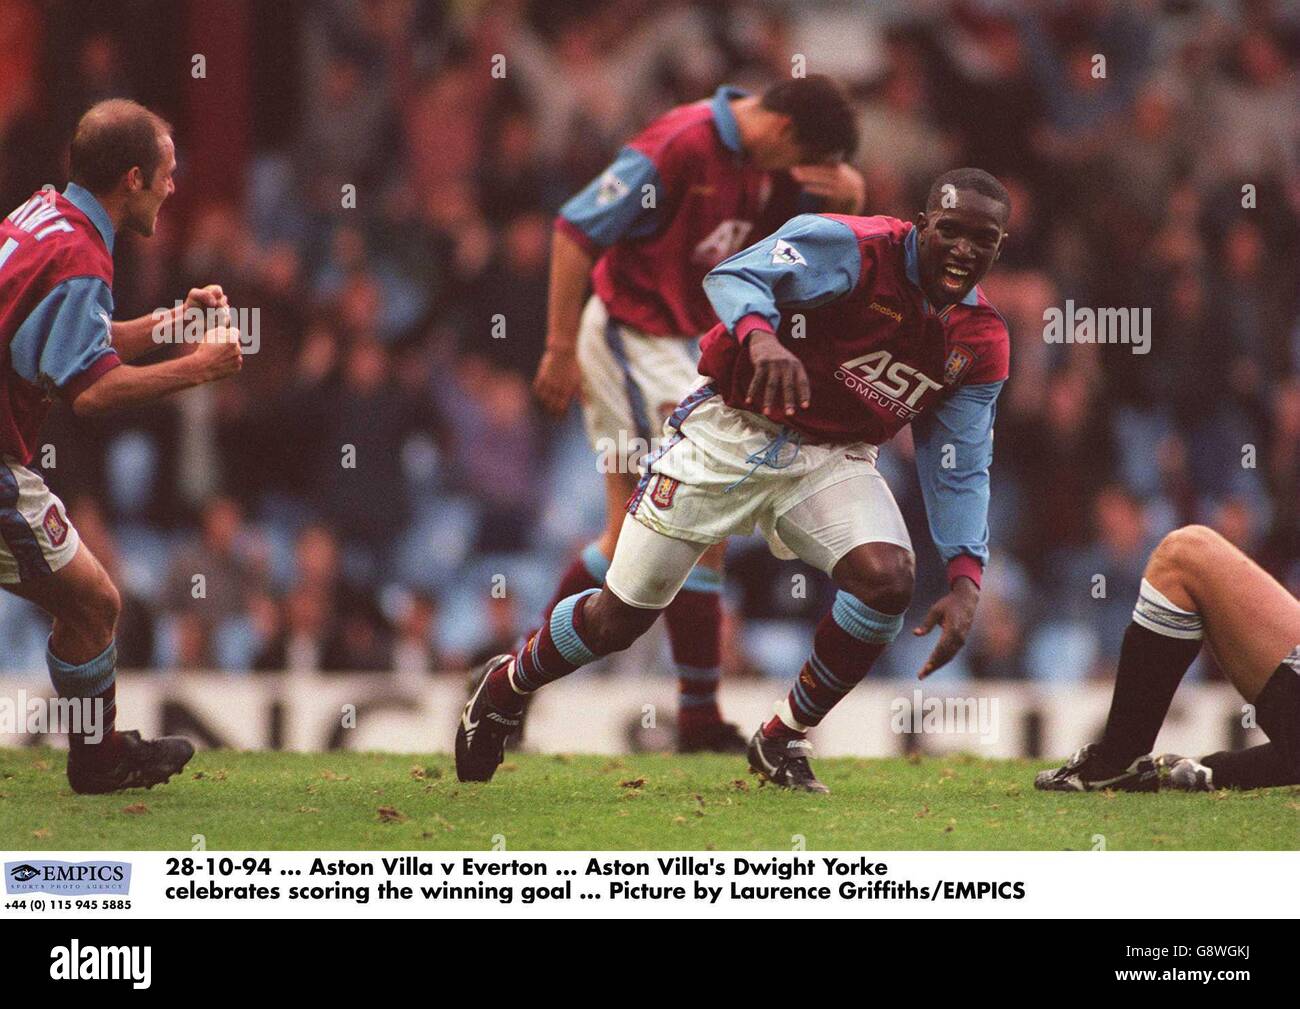 28-10-94 ... Aston Villa v Everton ... Aston Villa's Dwight Yorke celebrates scoring the winning goal ... Picture by Laurence Griffiths/EMPICS Stock Photo